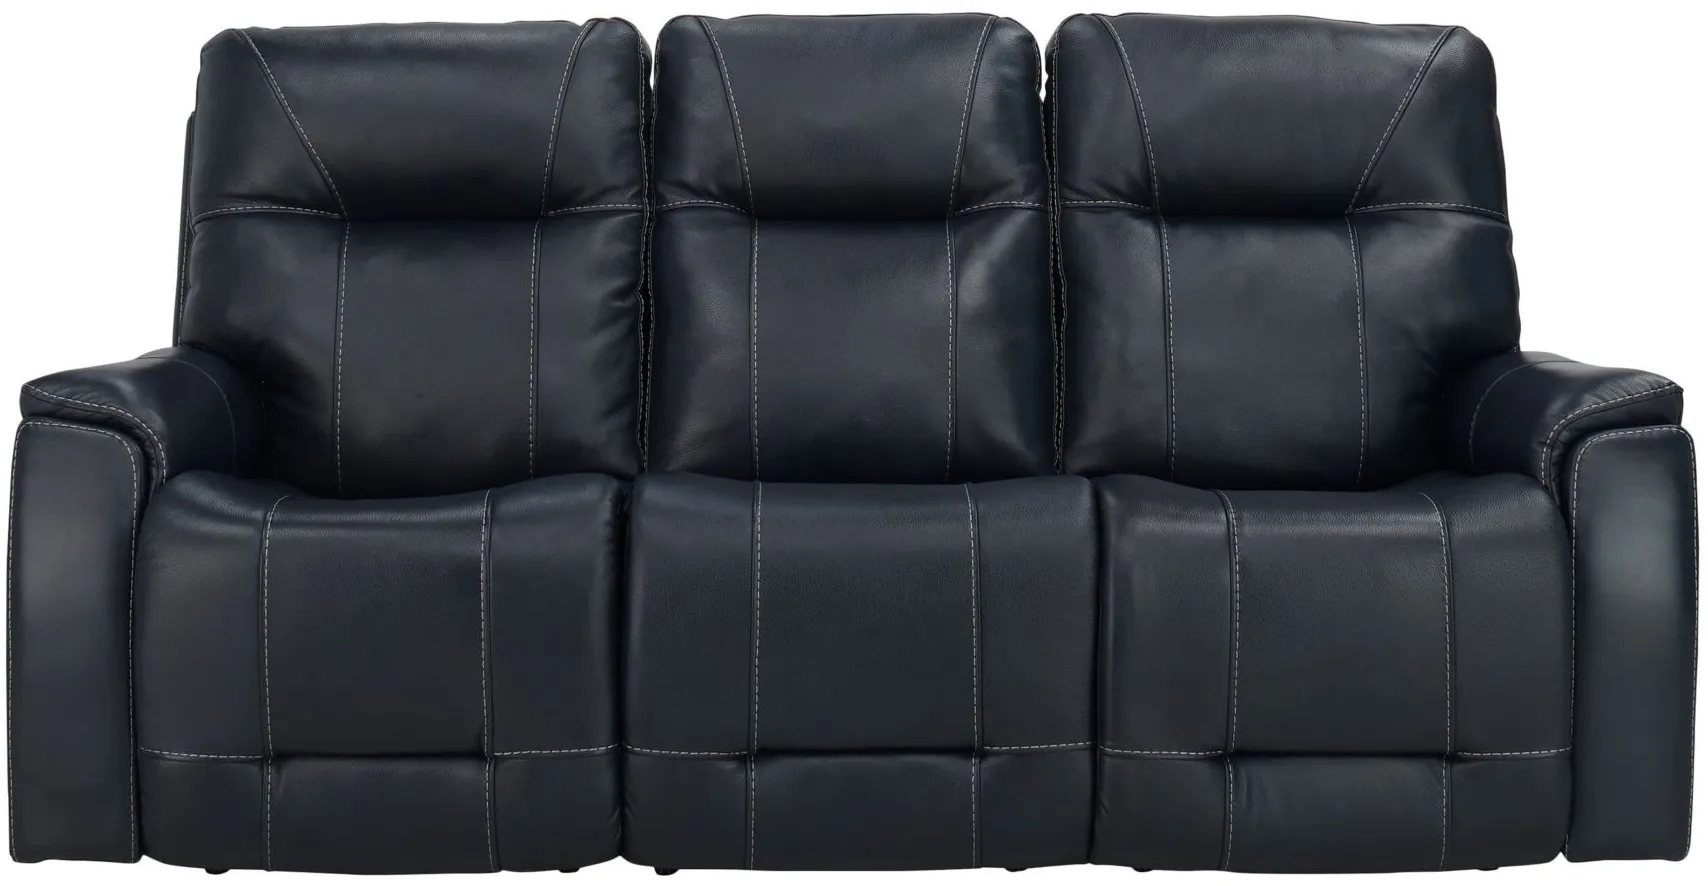 Barnett Leather Layflat Power Sofa w/ Power Headrest and Lumbar in Blue by Bellanest